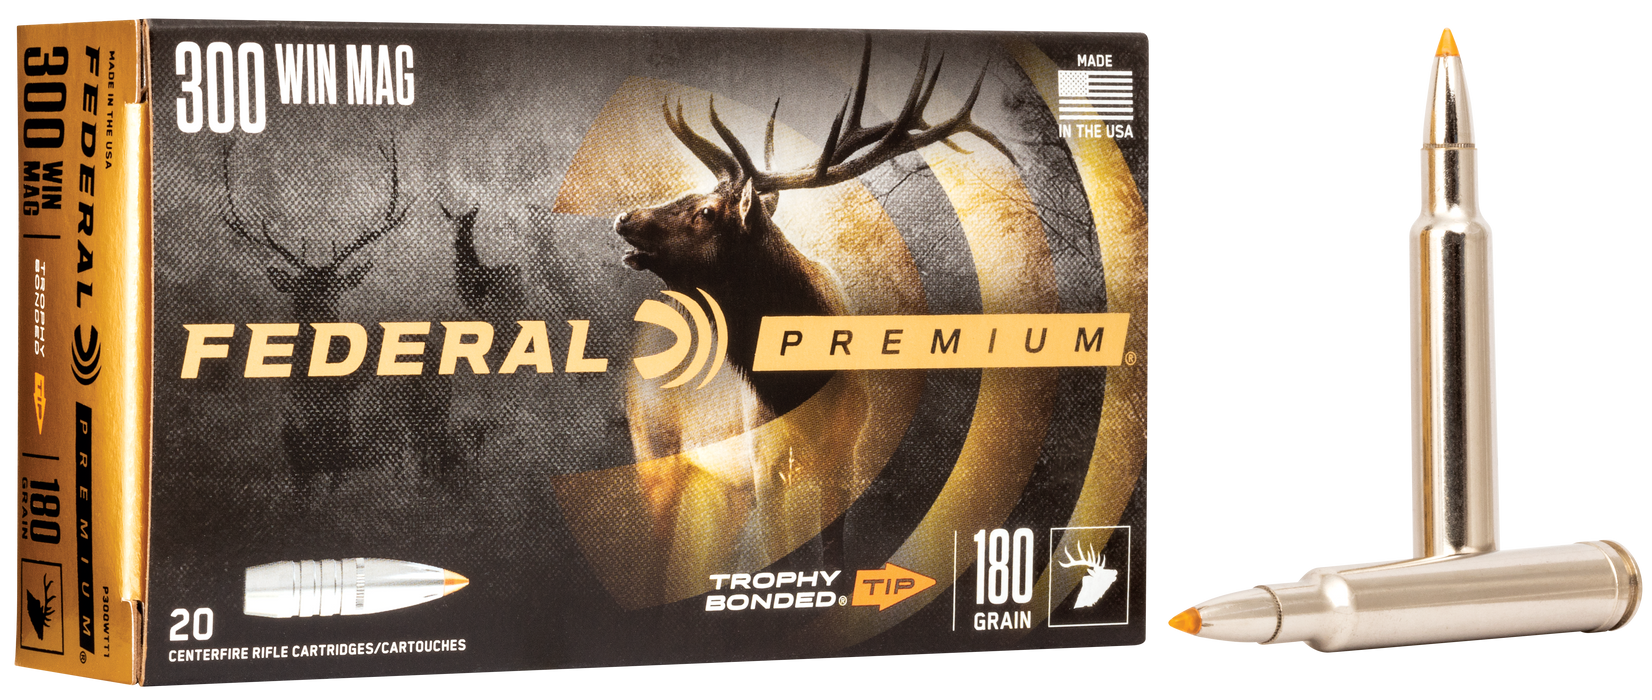 Federal Premium .300 Win Mag 180 gr Trophy Bonded Tip 20 Per Box